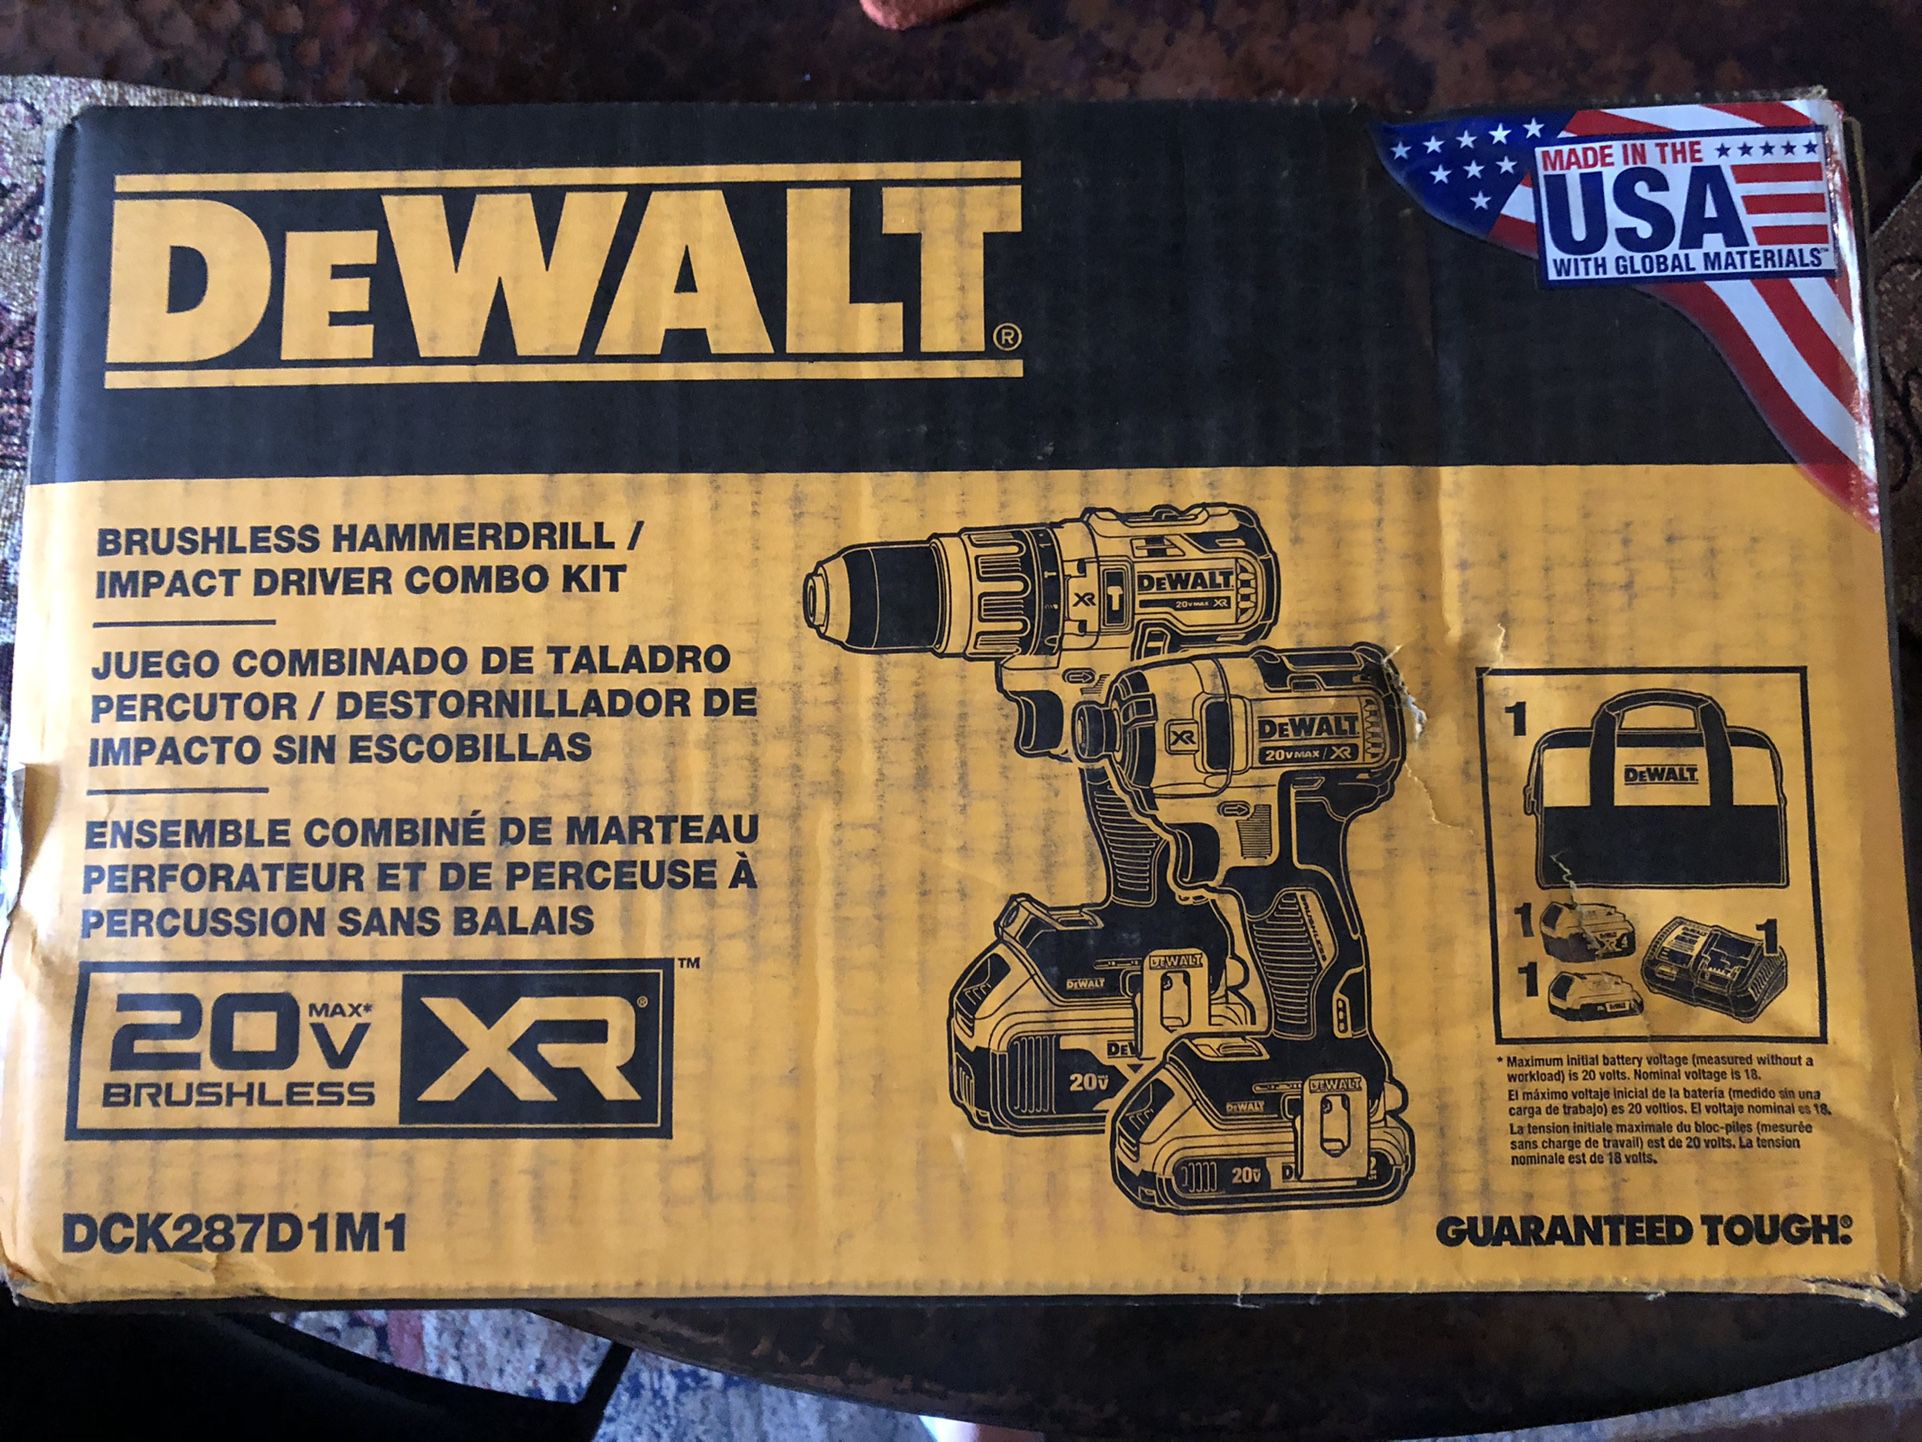 Dewalt 20v Hammer Drill Impact Driver for Sale in Scottsdale, AZ OfferUp